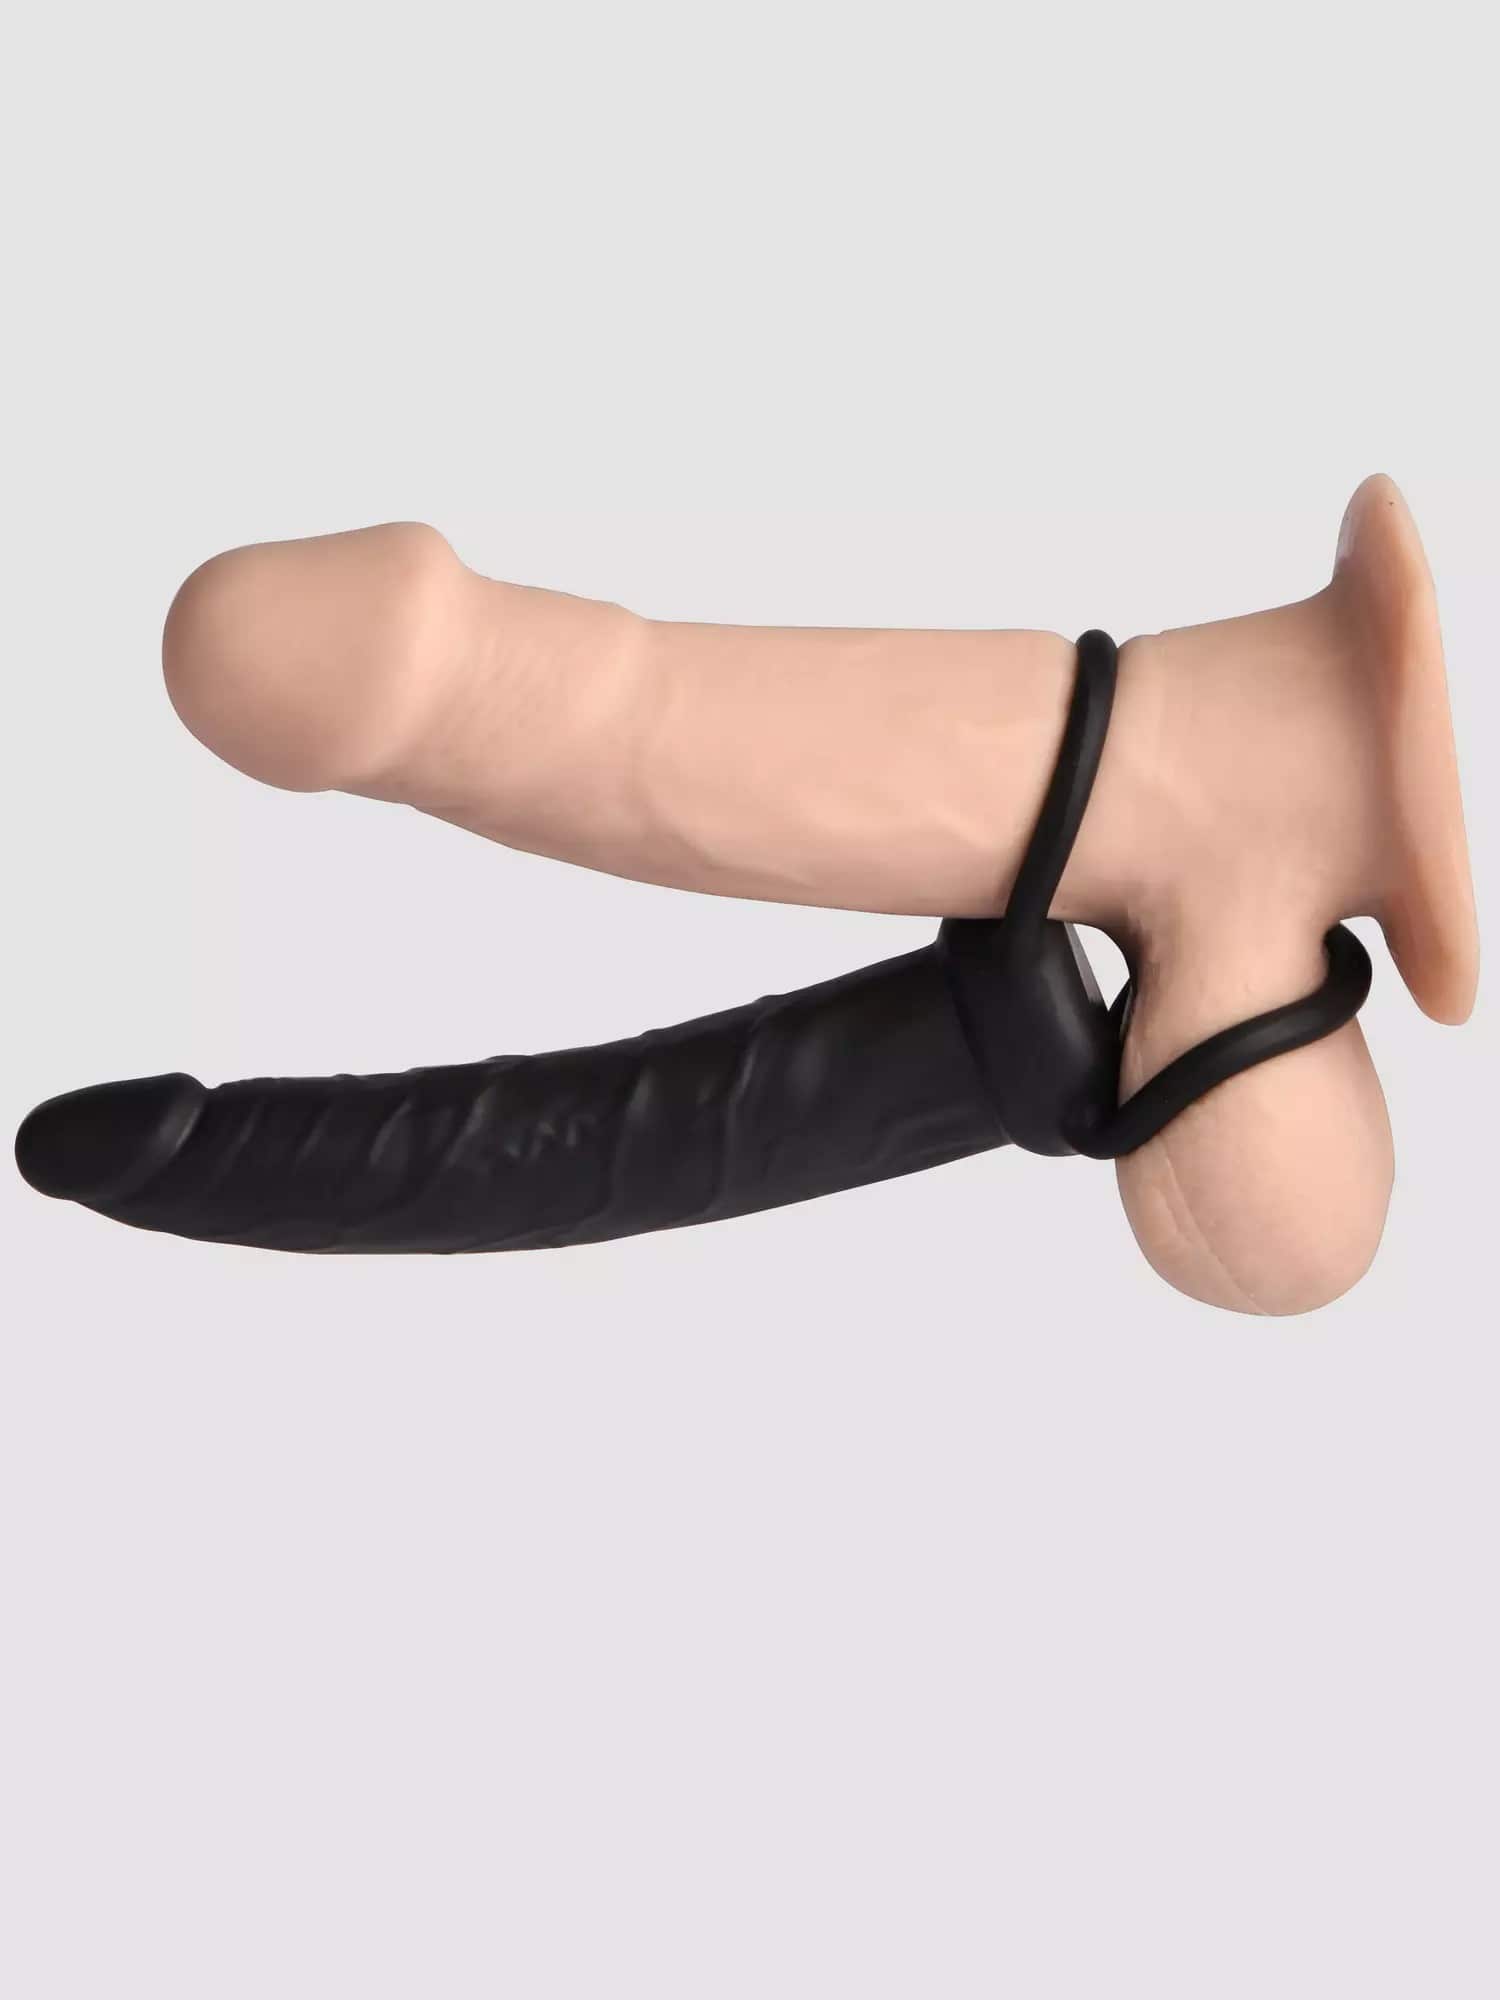 Double Penetration Vibrator Sex Toys Penis Strapon Dildo Vibrator, Strap On  Penis Anal Plug for Man, Adult Sex Toys for Beginner